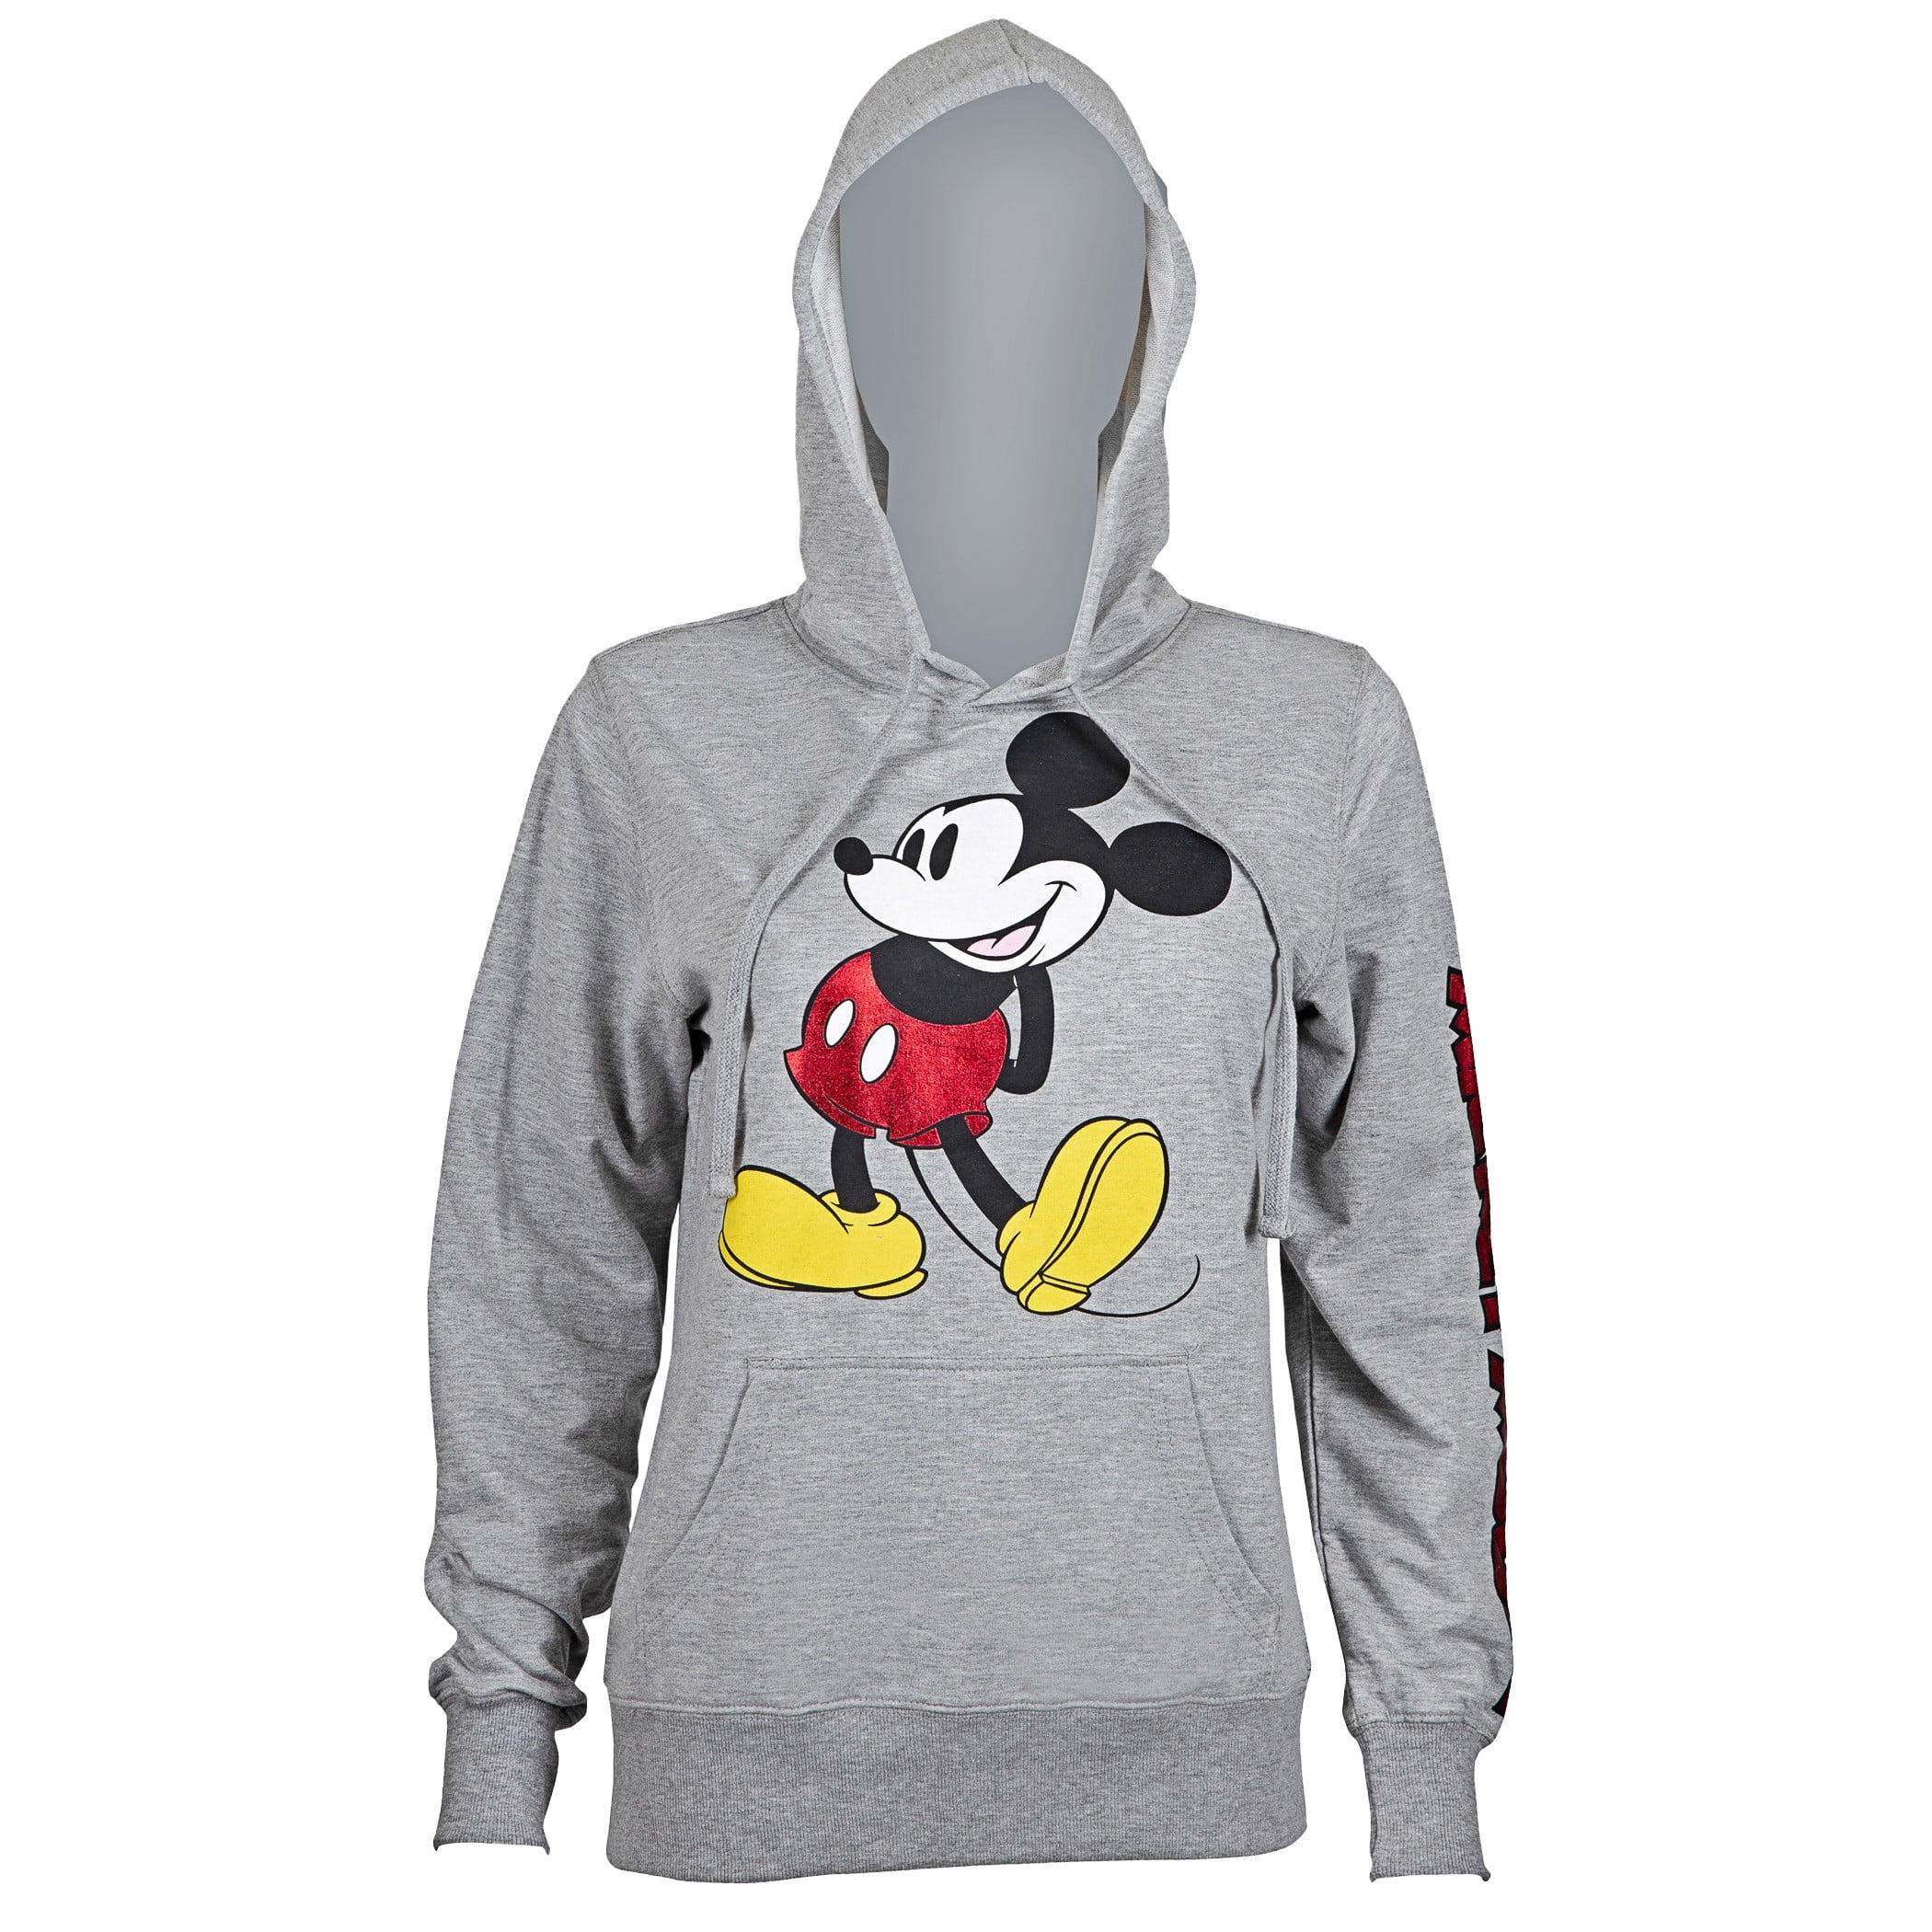 Womens Mickey Mouse Hoodie Sweatshirt Jumper Pullover Winter Hooded Tops Outwear 